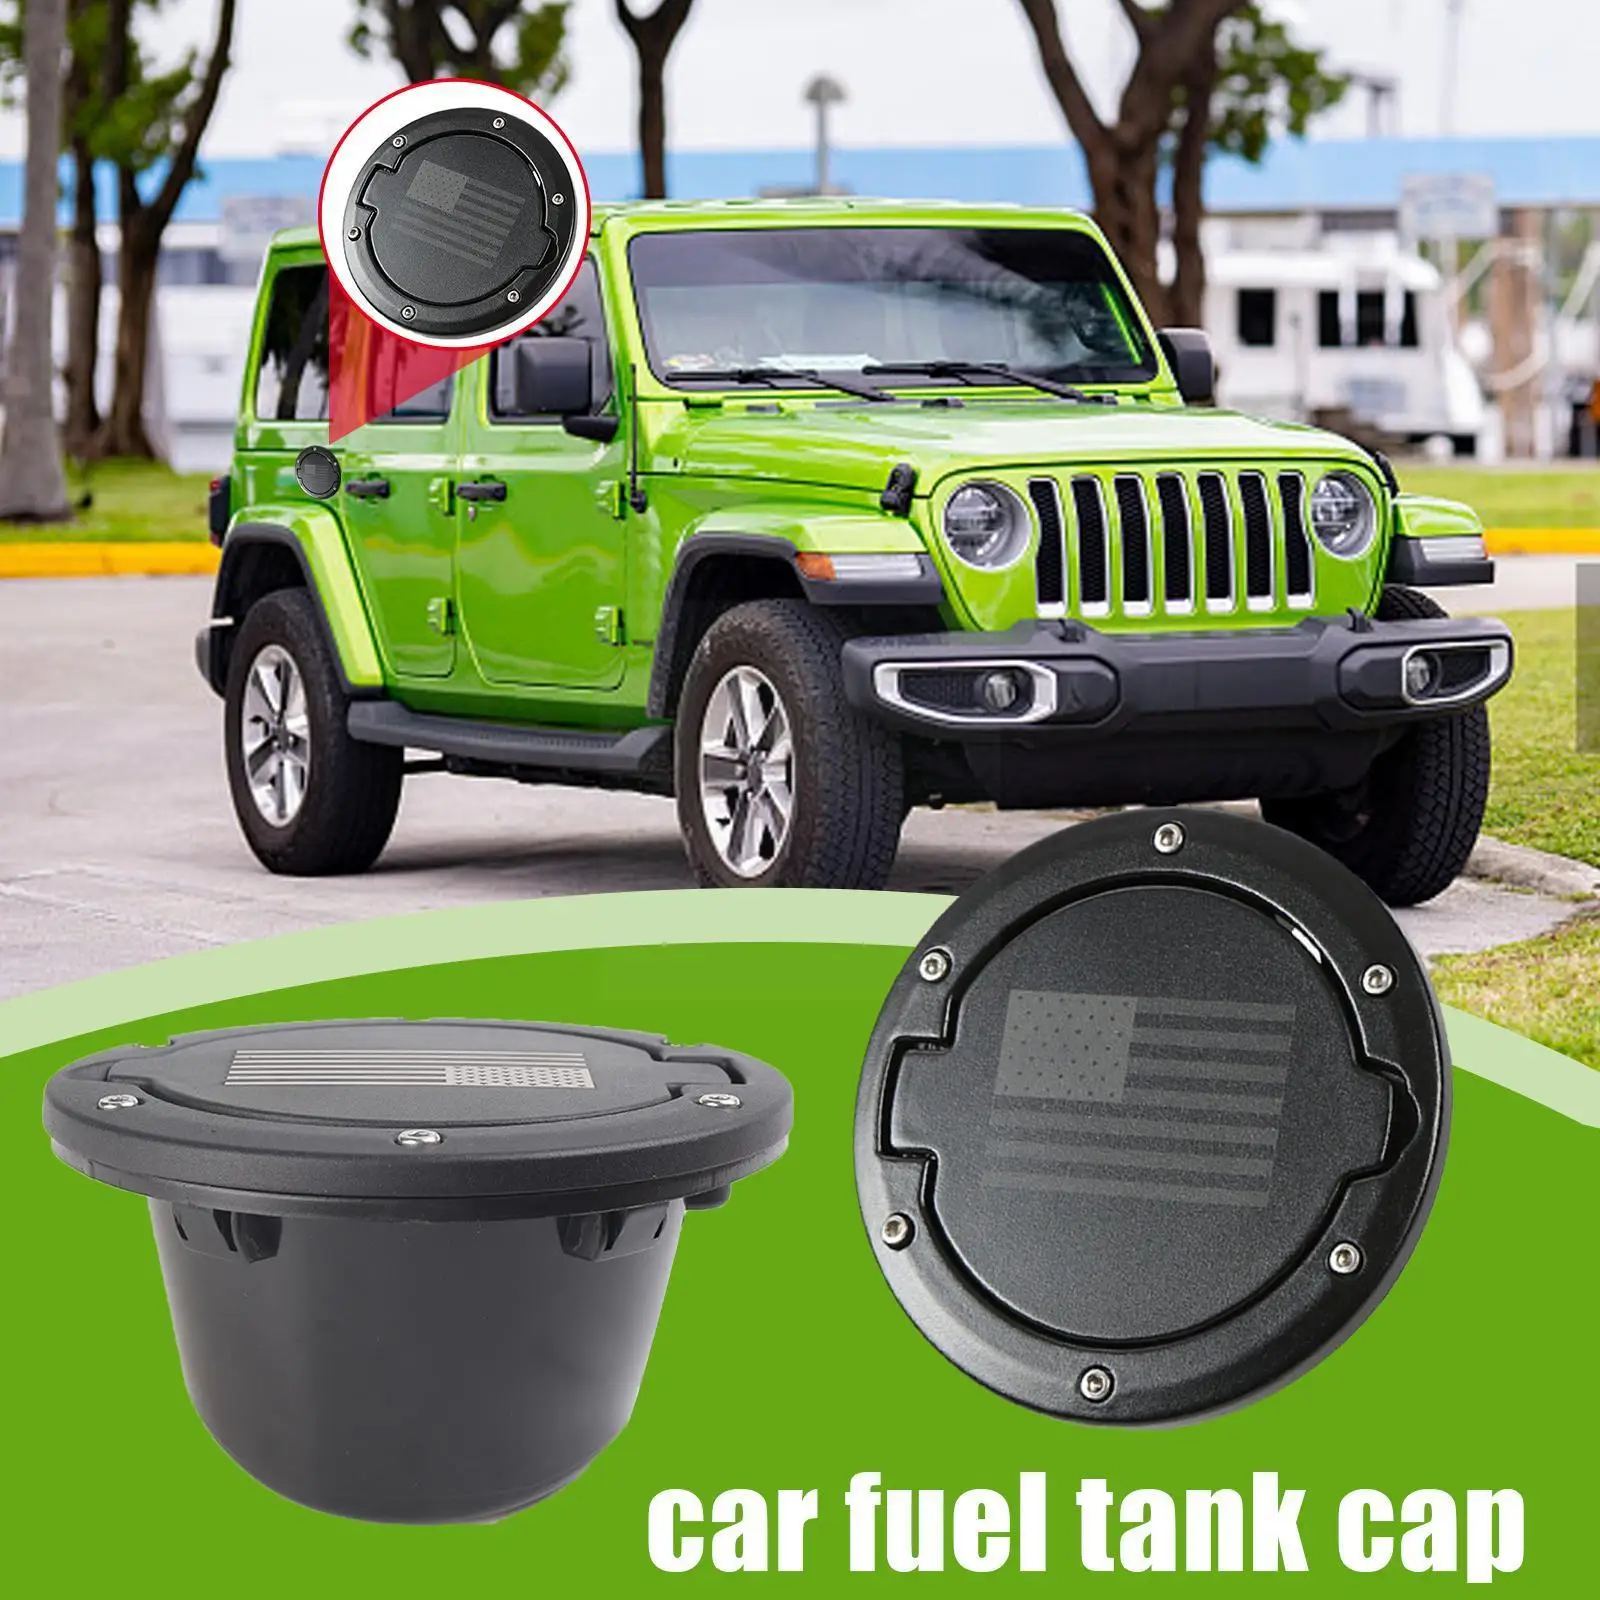 Tank Covers for Jeep Wrangler JK 2007-2017 Car oil Cap Fuel Tank Cap Cover for Jeep Wrangler Accessories Car Styling D5J9